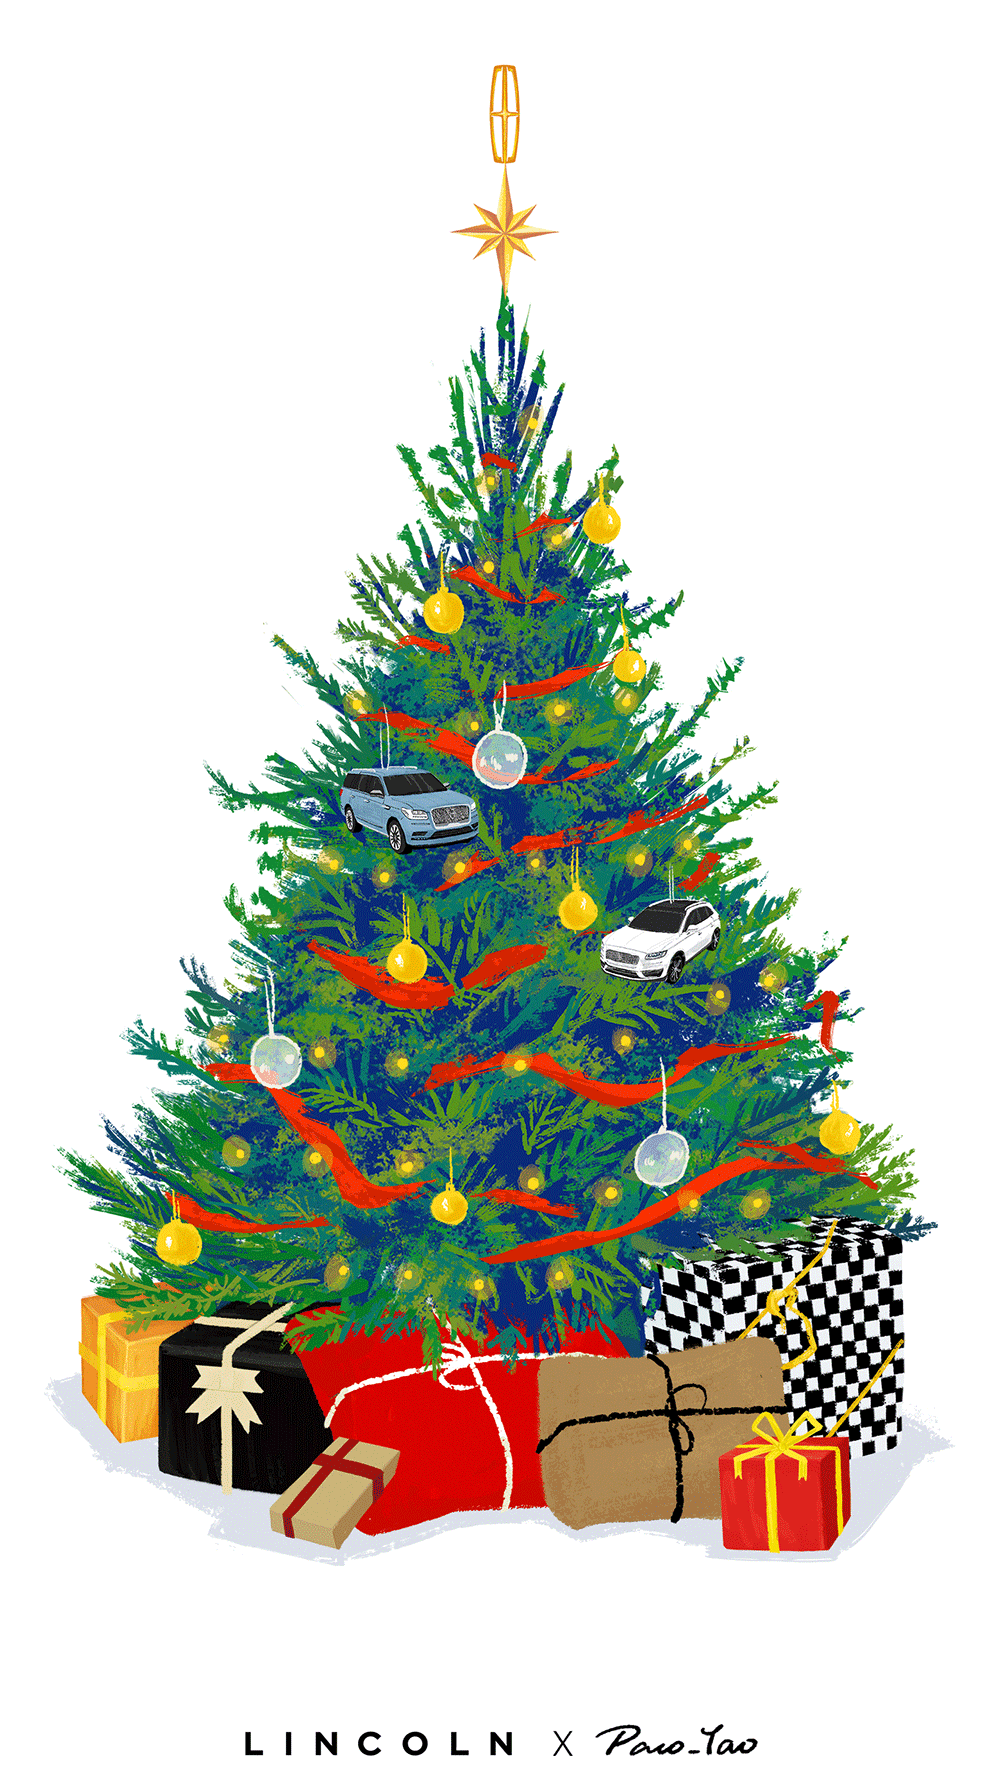 Paco_Yao 原创插画 商业合作 GIF动图 LINCOLN 林肯汽车 圣诞快乐 圣诞树